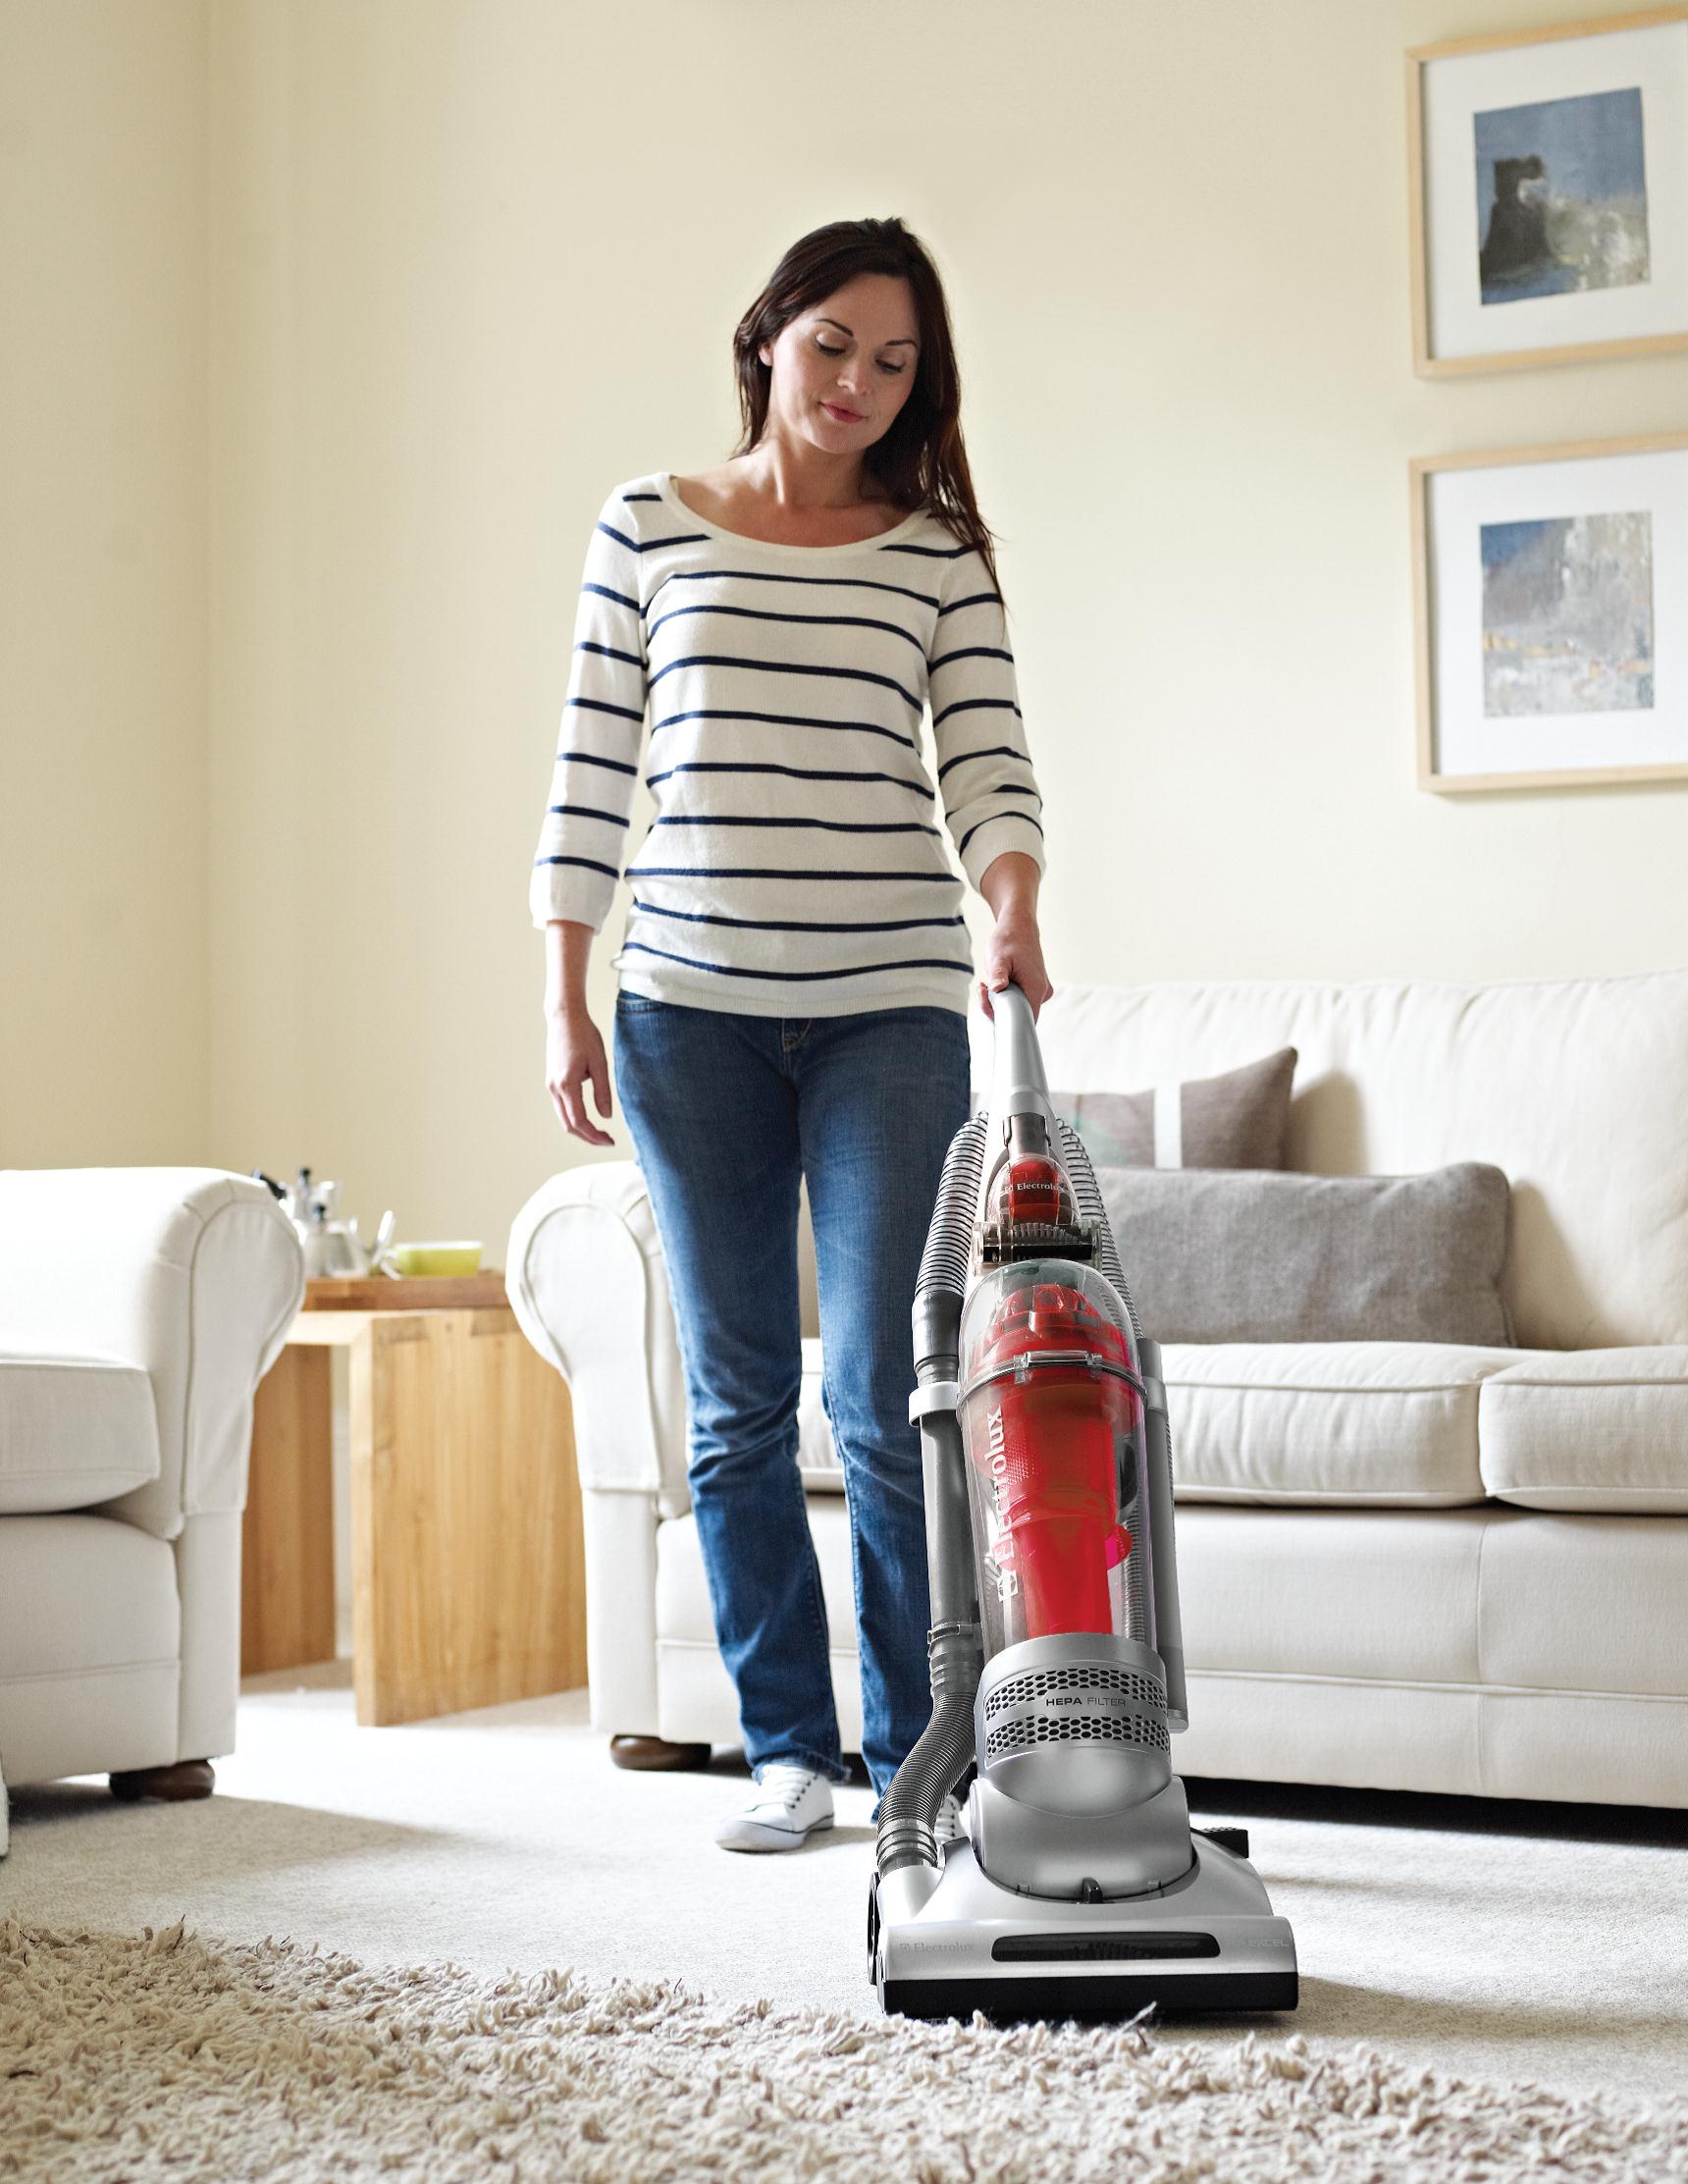 Home vacuum cleaner. Девушка с пылесосом. Уборка пылесосом. Баба пылесос. Пылесосы современные модели.